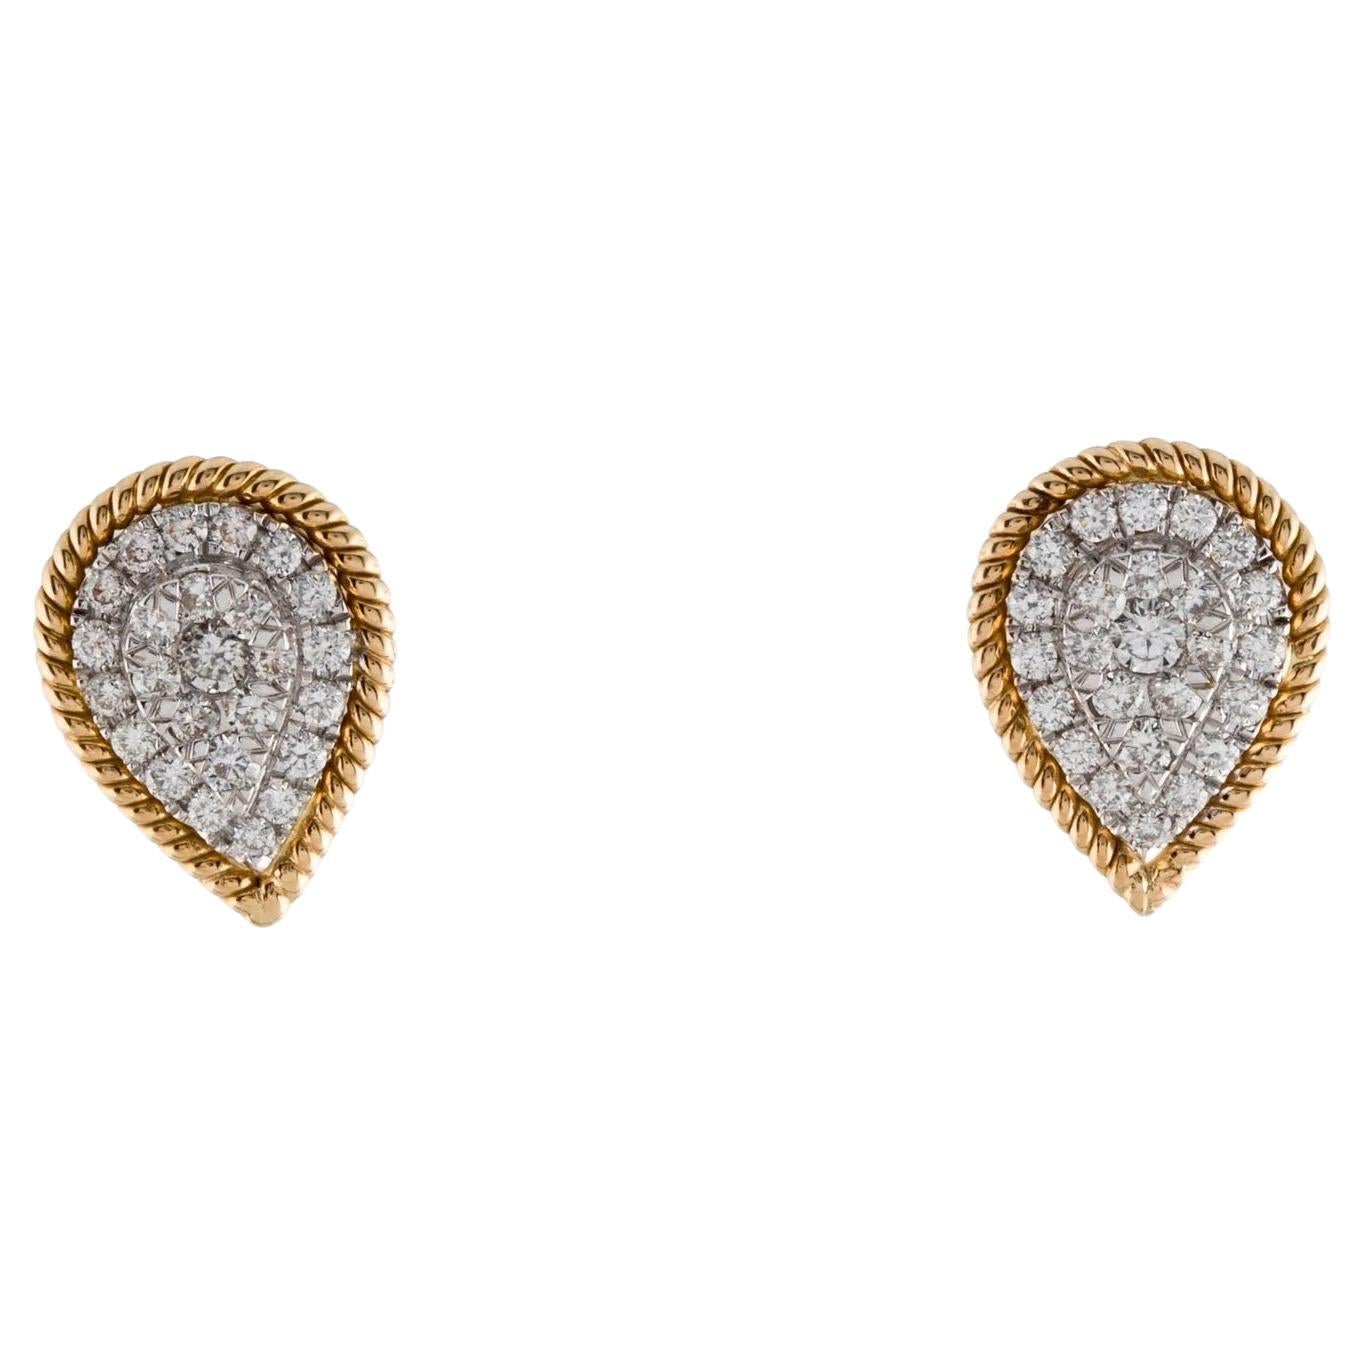  18K Yellow Gold Diamond Stud Earrings, 0.56 Carats For Sale